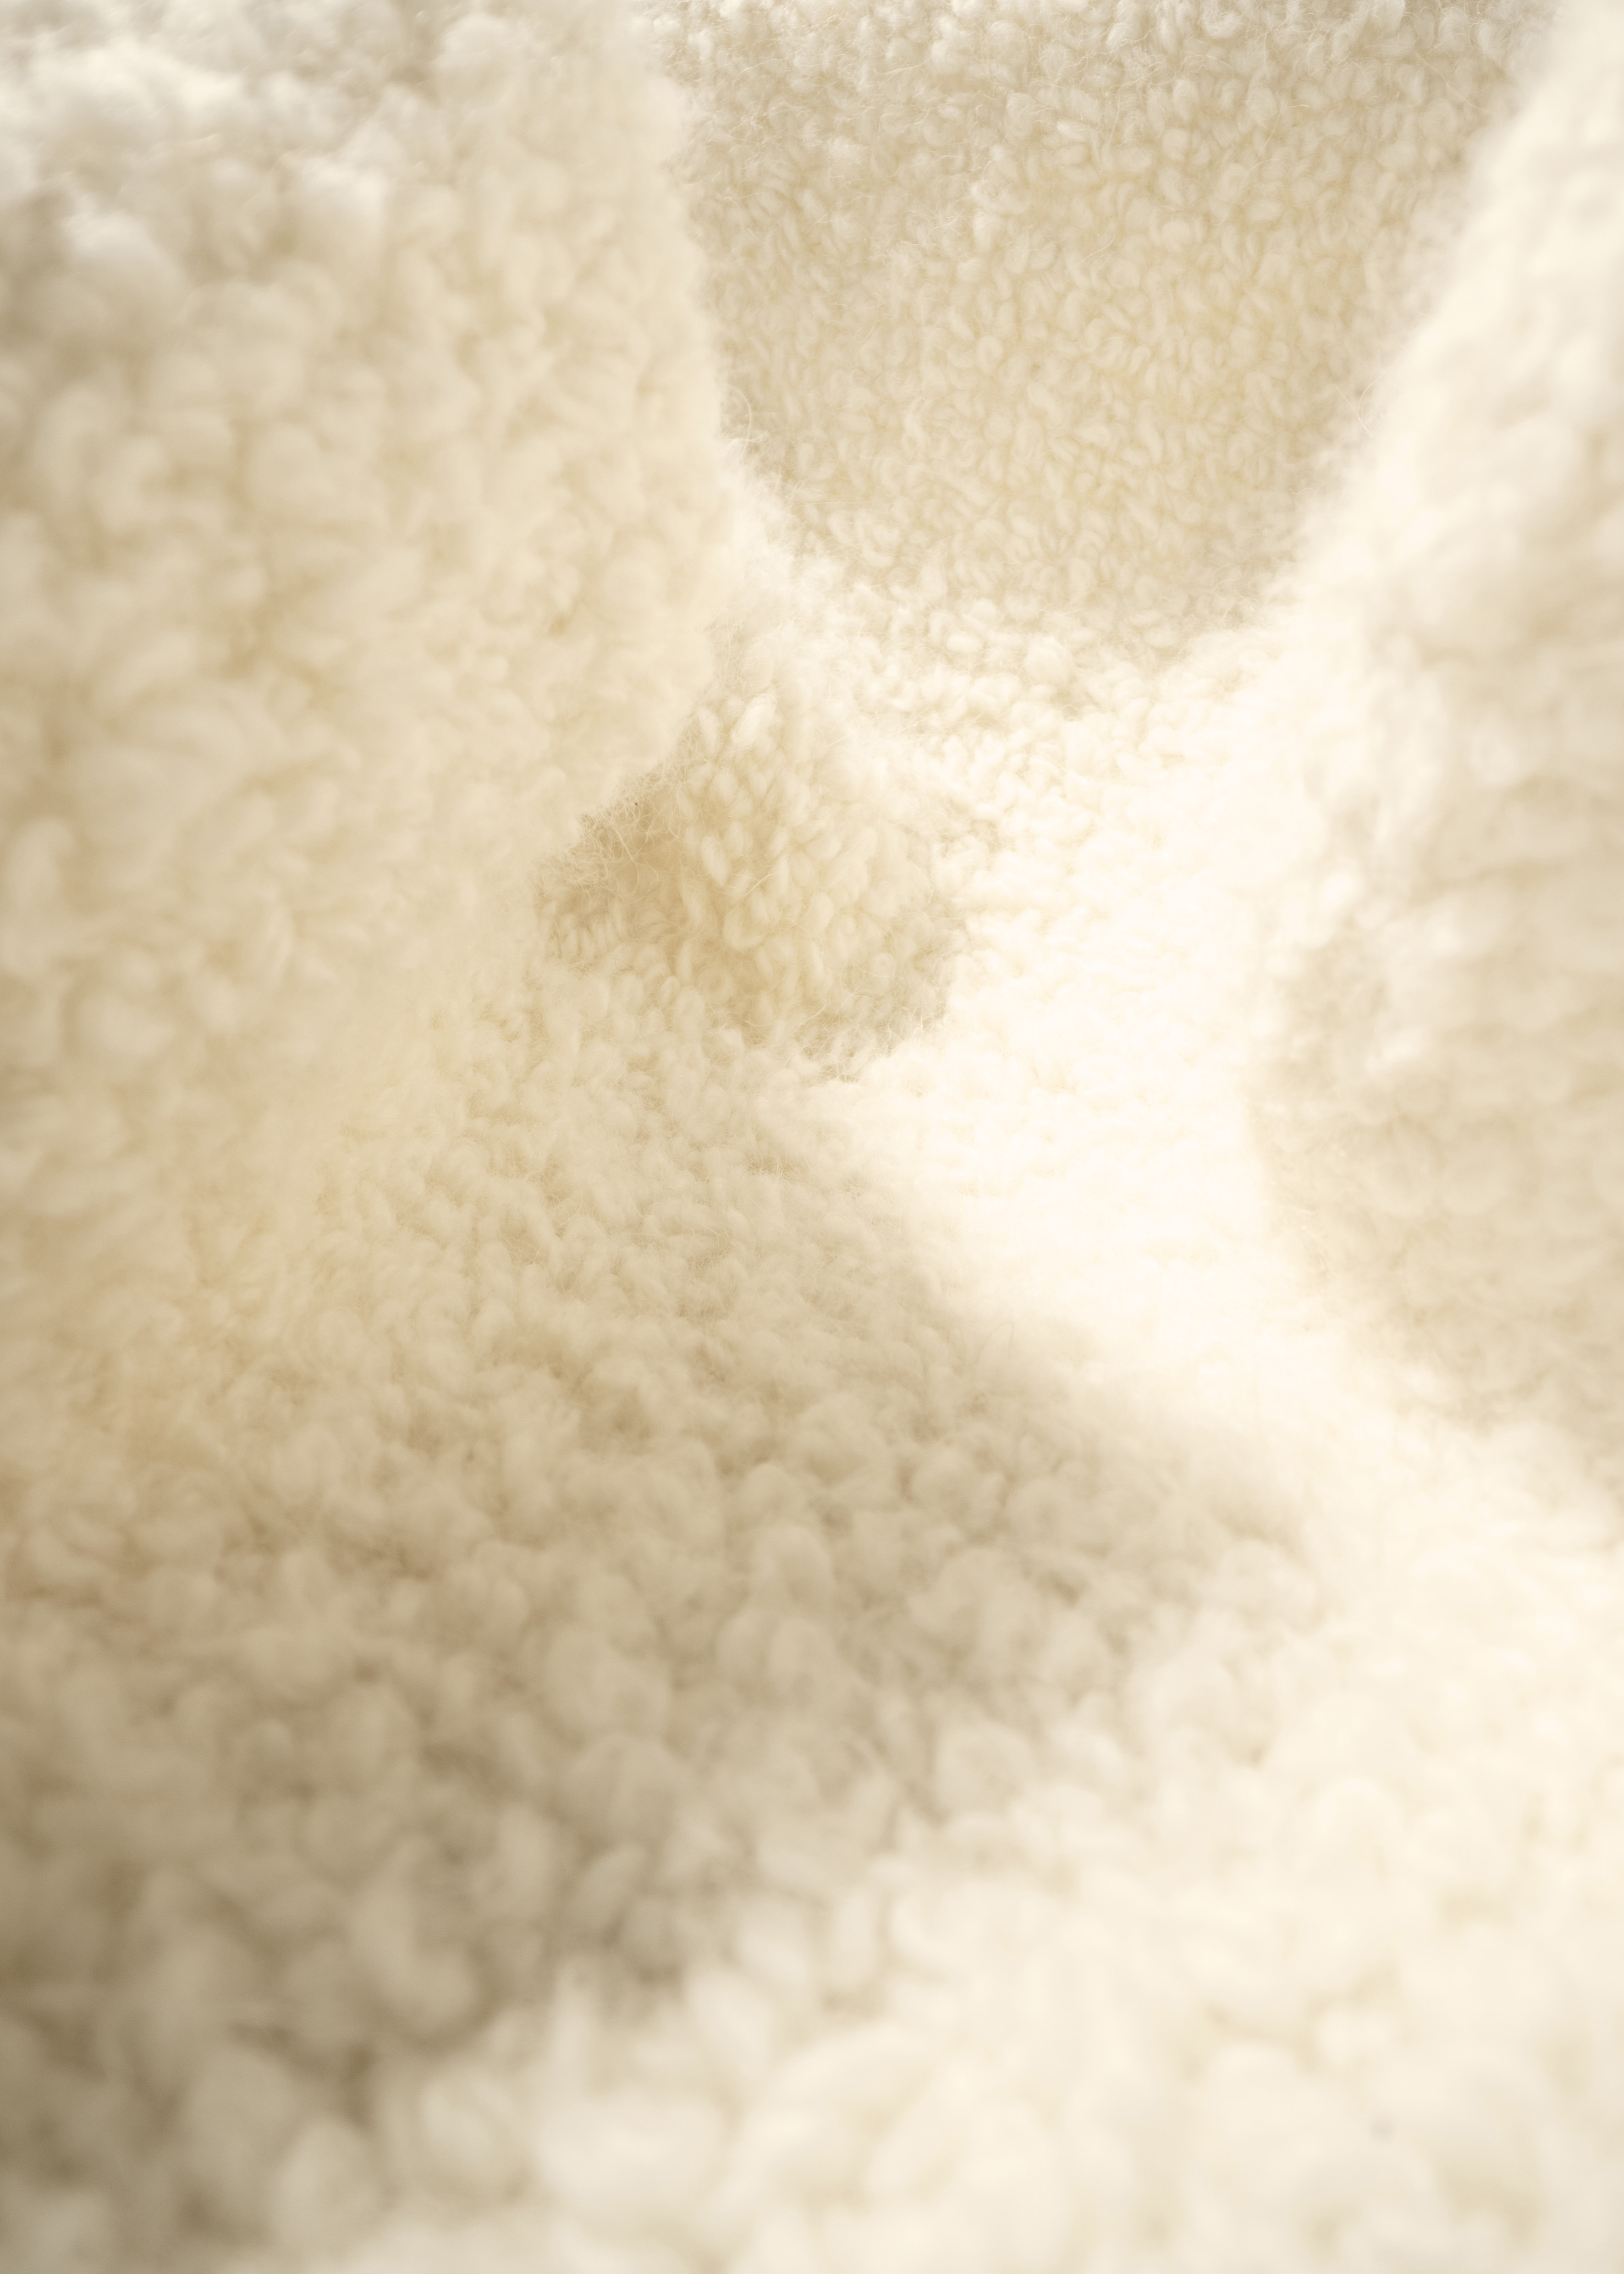 Proveedor chino de alfombras Artweaver, proveedor chino de alfombras  Artweaver, alfombra Shaggy, alfombra de poliéster